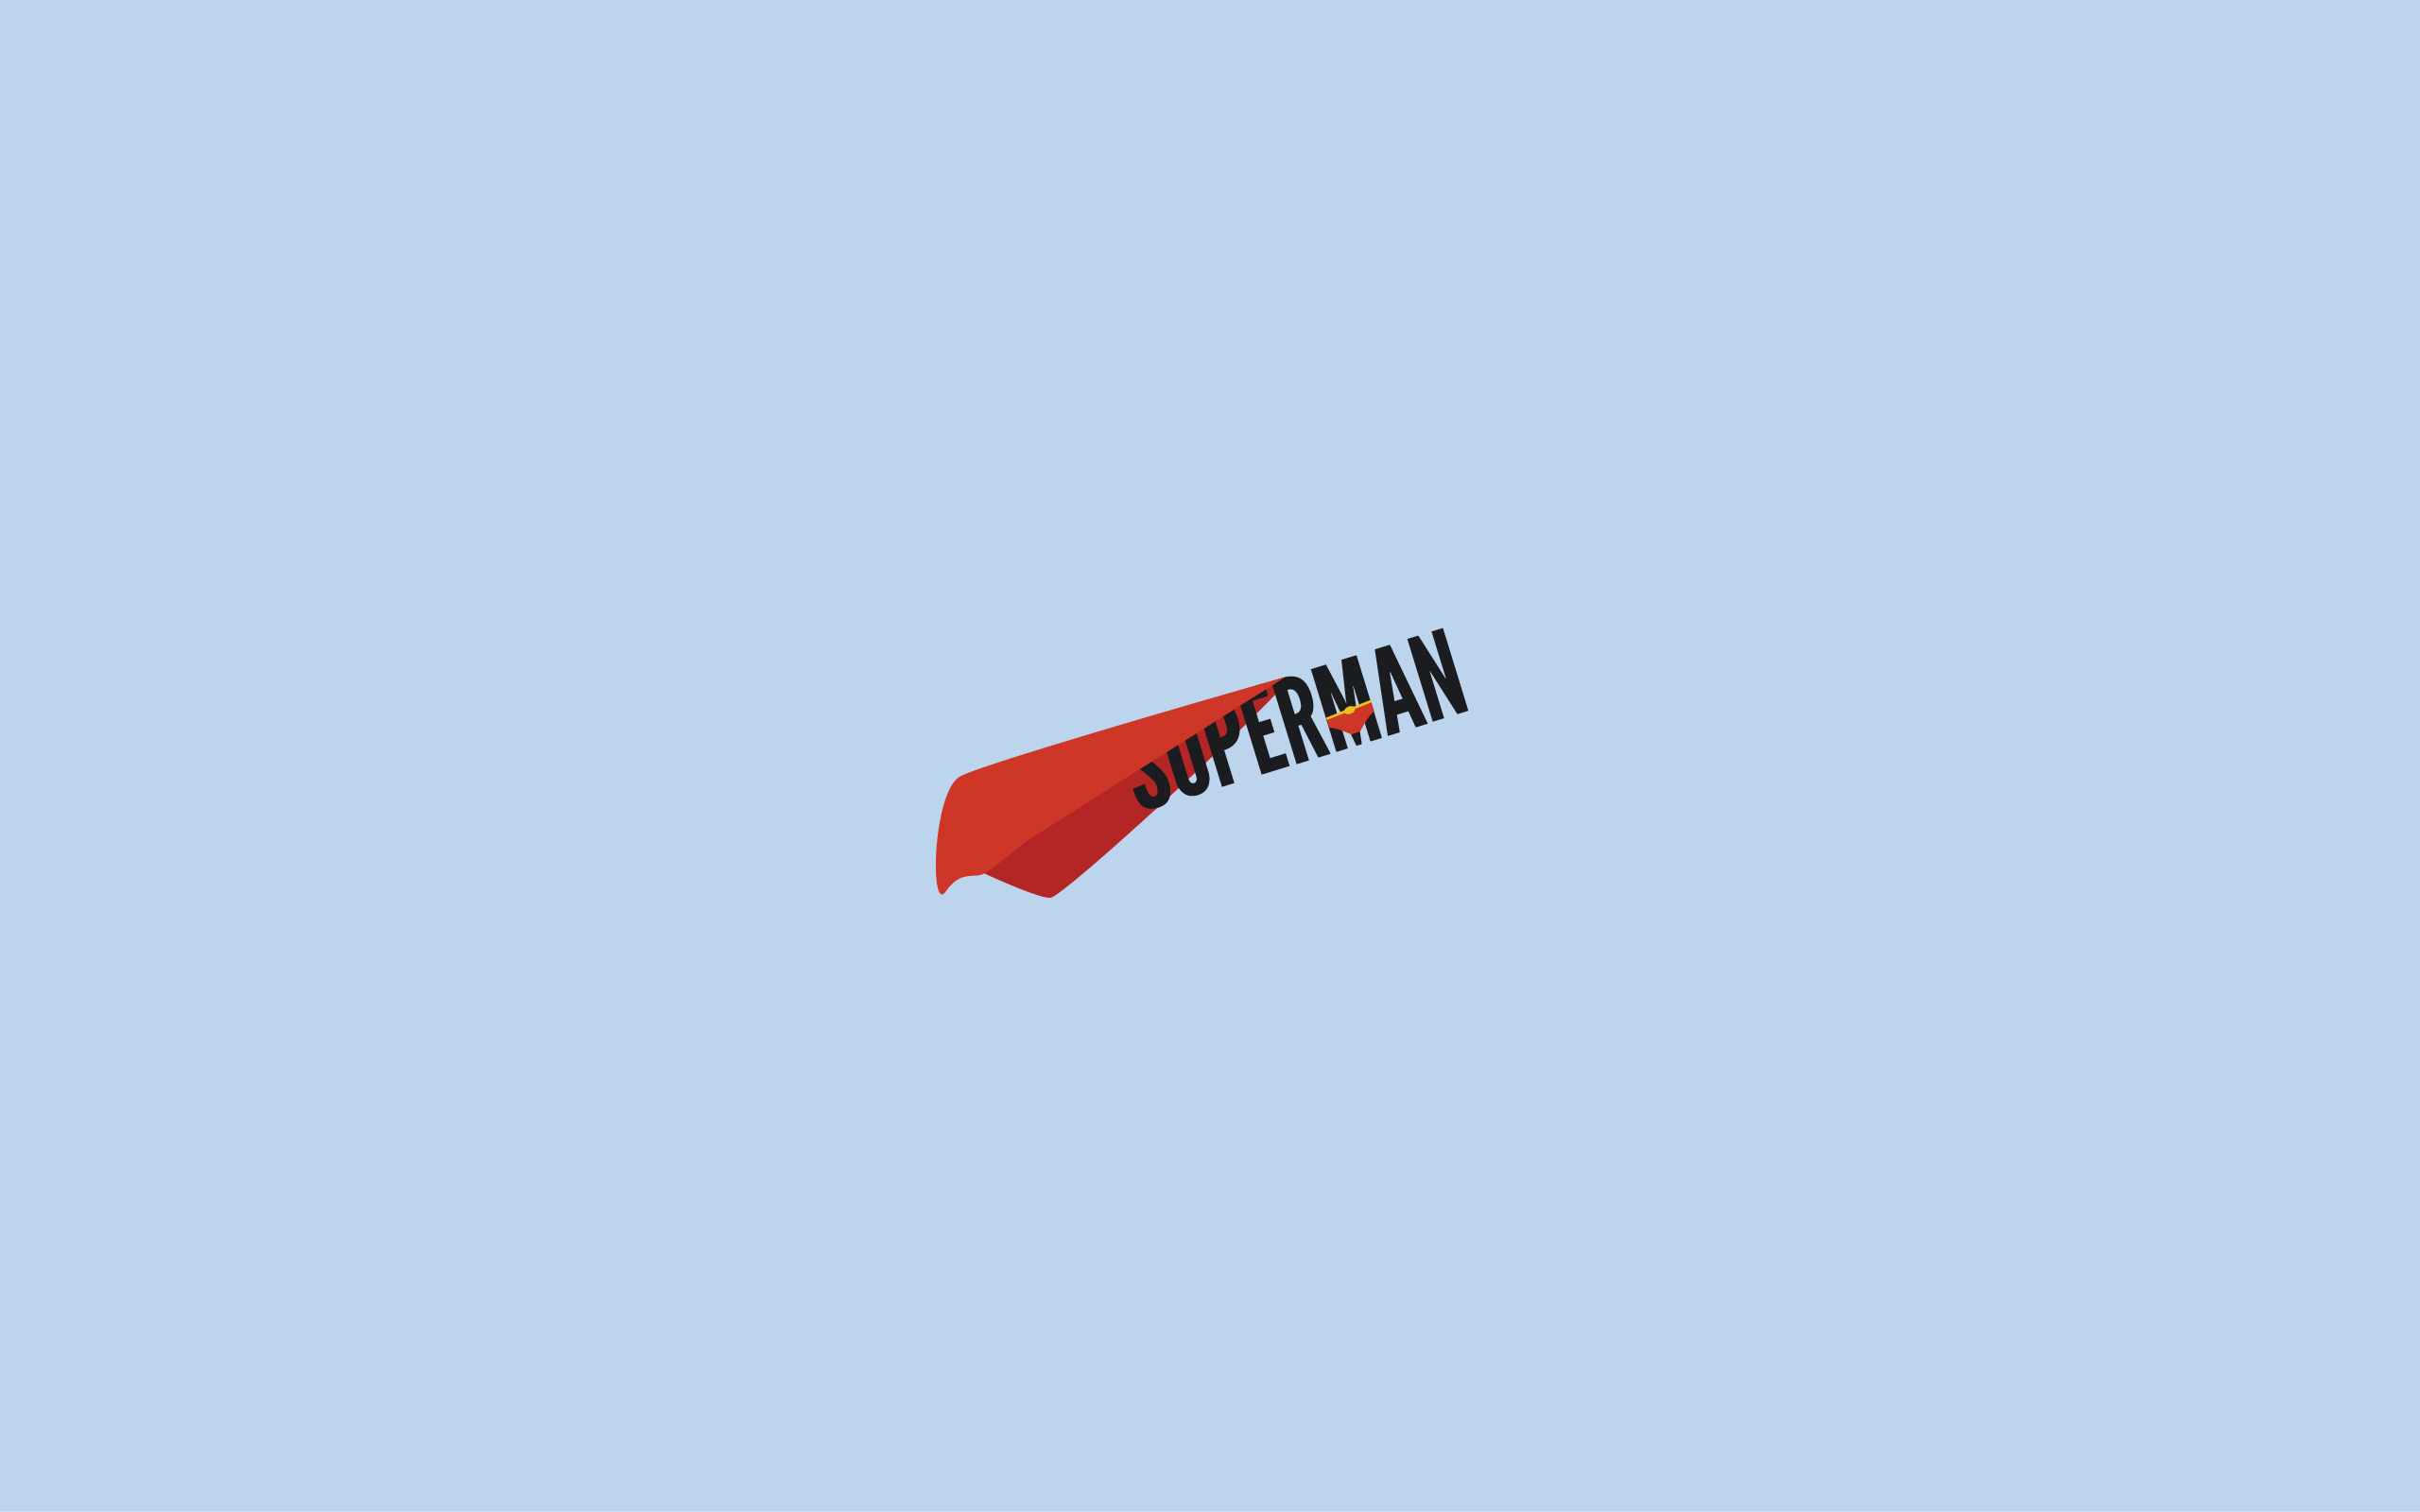 Superman シンプルだけどお洒落 Pcデスクトップ壁紙 画像集 100枚超 Naver まとめ